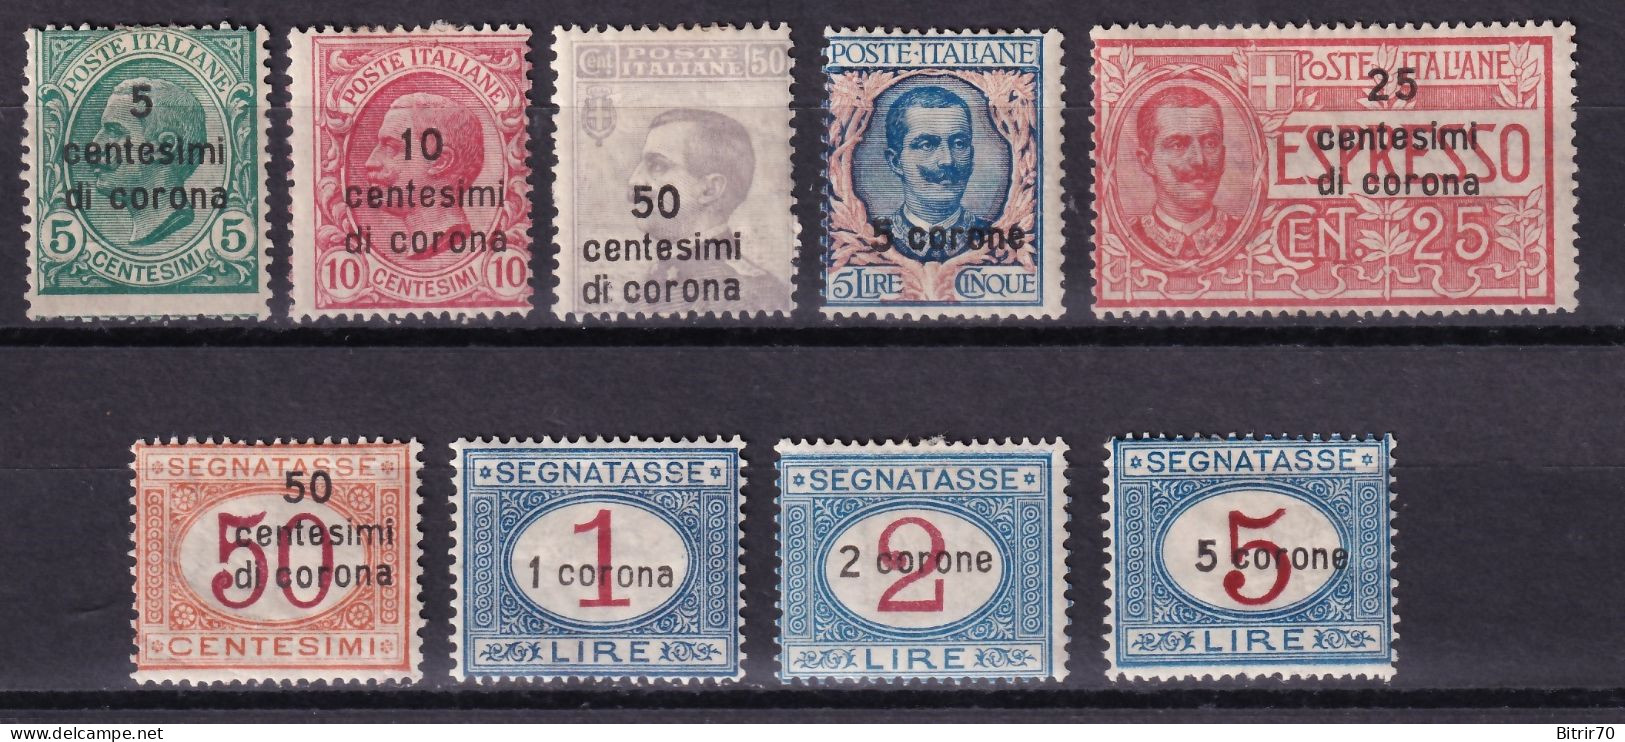 Italia, Dalmatia 1921-1922 Lote De Sellos, Distintos Valores, MH - Dalmazia